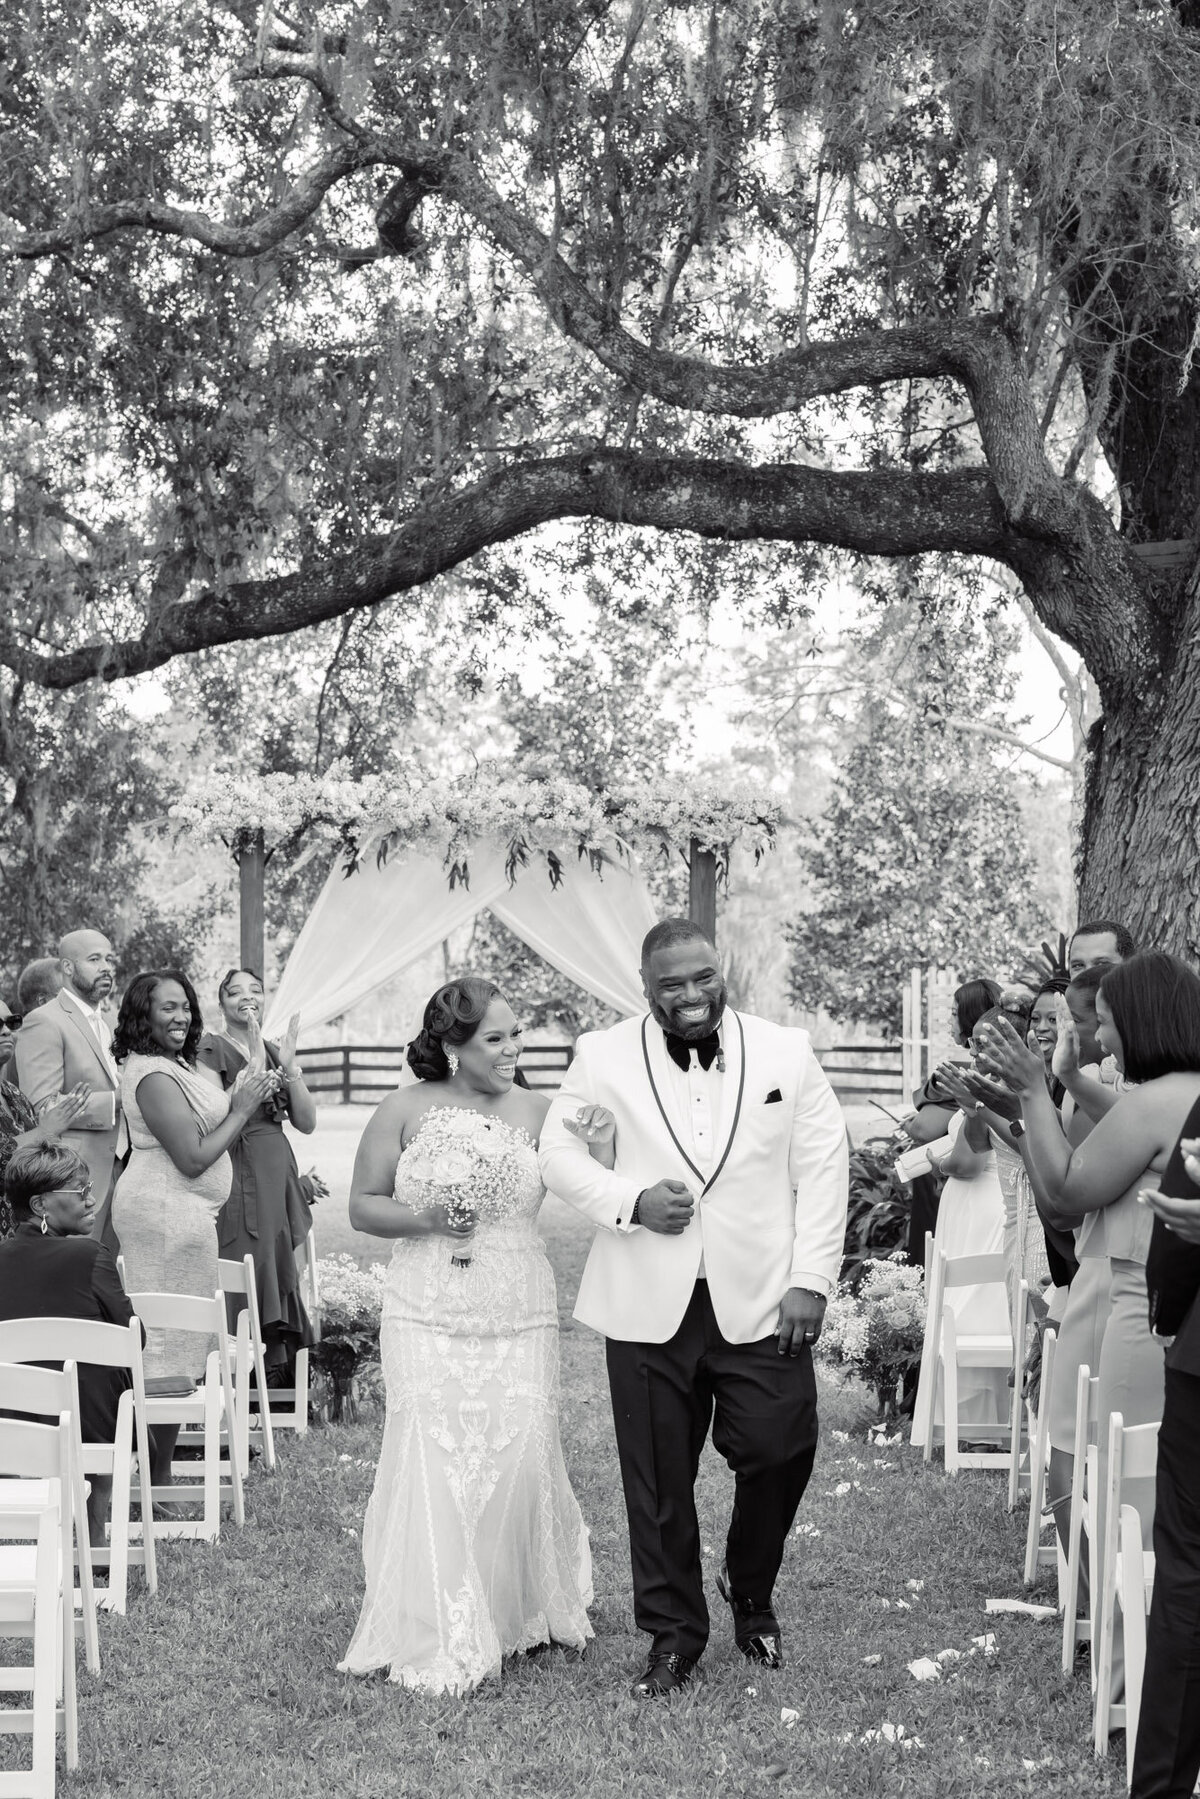 Michael and Mishka-Wedding-Green Cabin Ranch-Astatula, FL-FL Wedding Photographer-Orlando Photographer-Emily Pillon Photography-S-120423-174